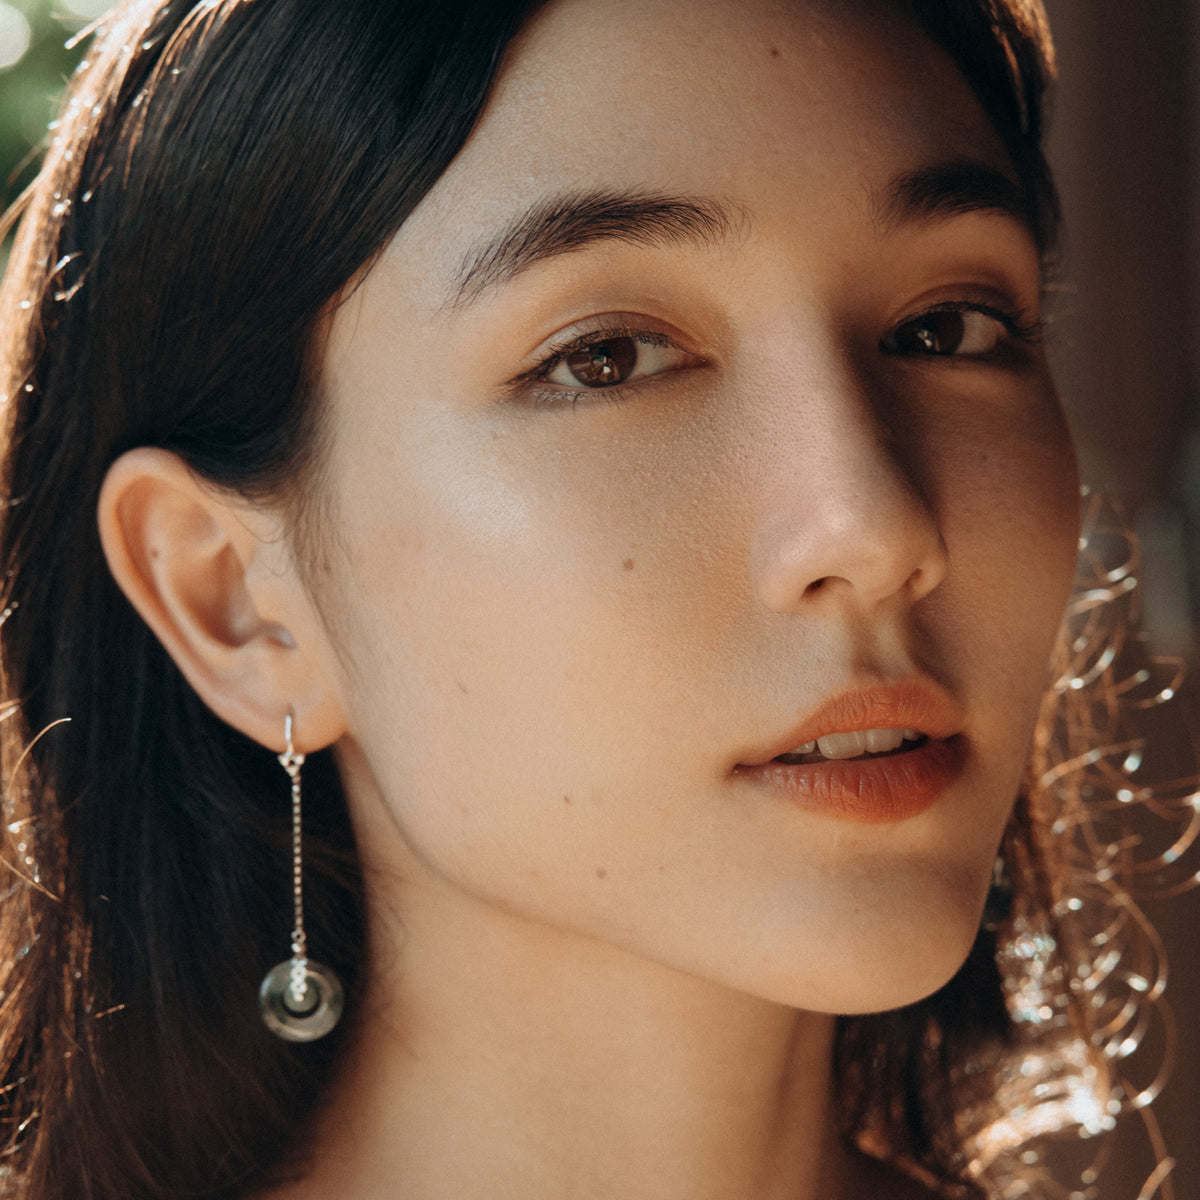 Profile picture with jade circle hoop earrings